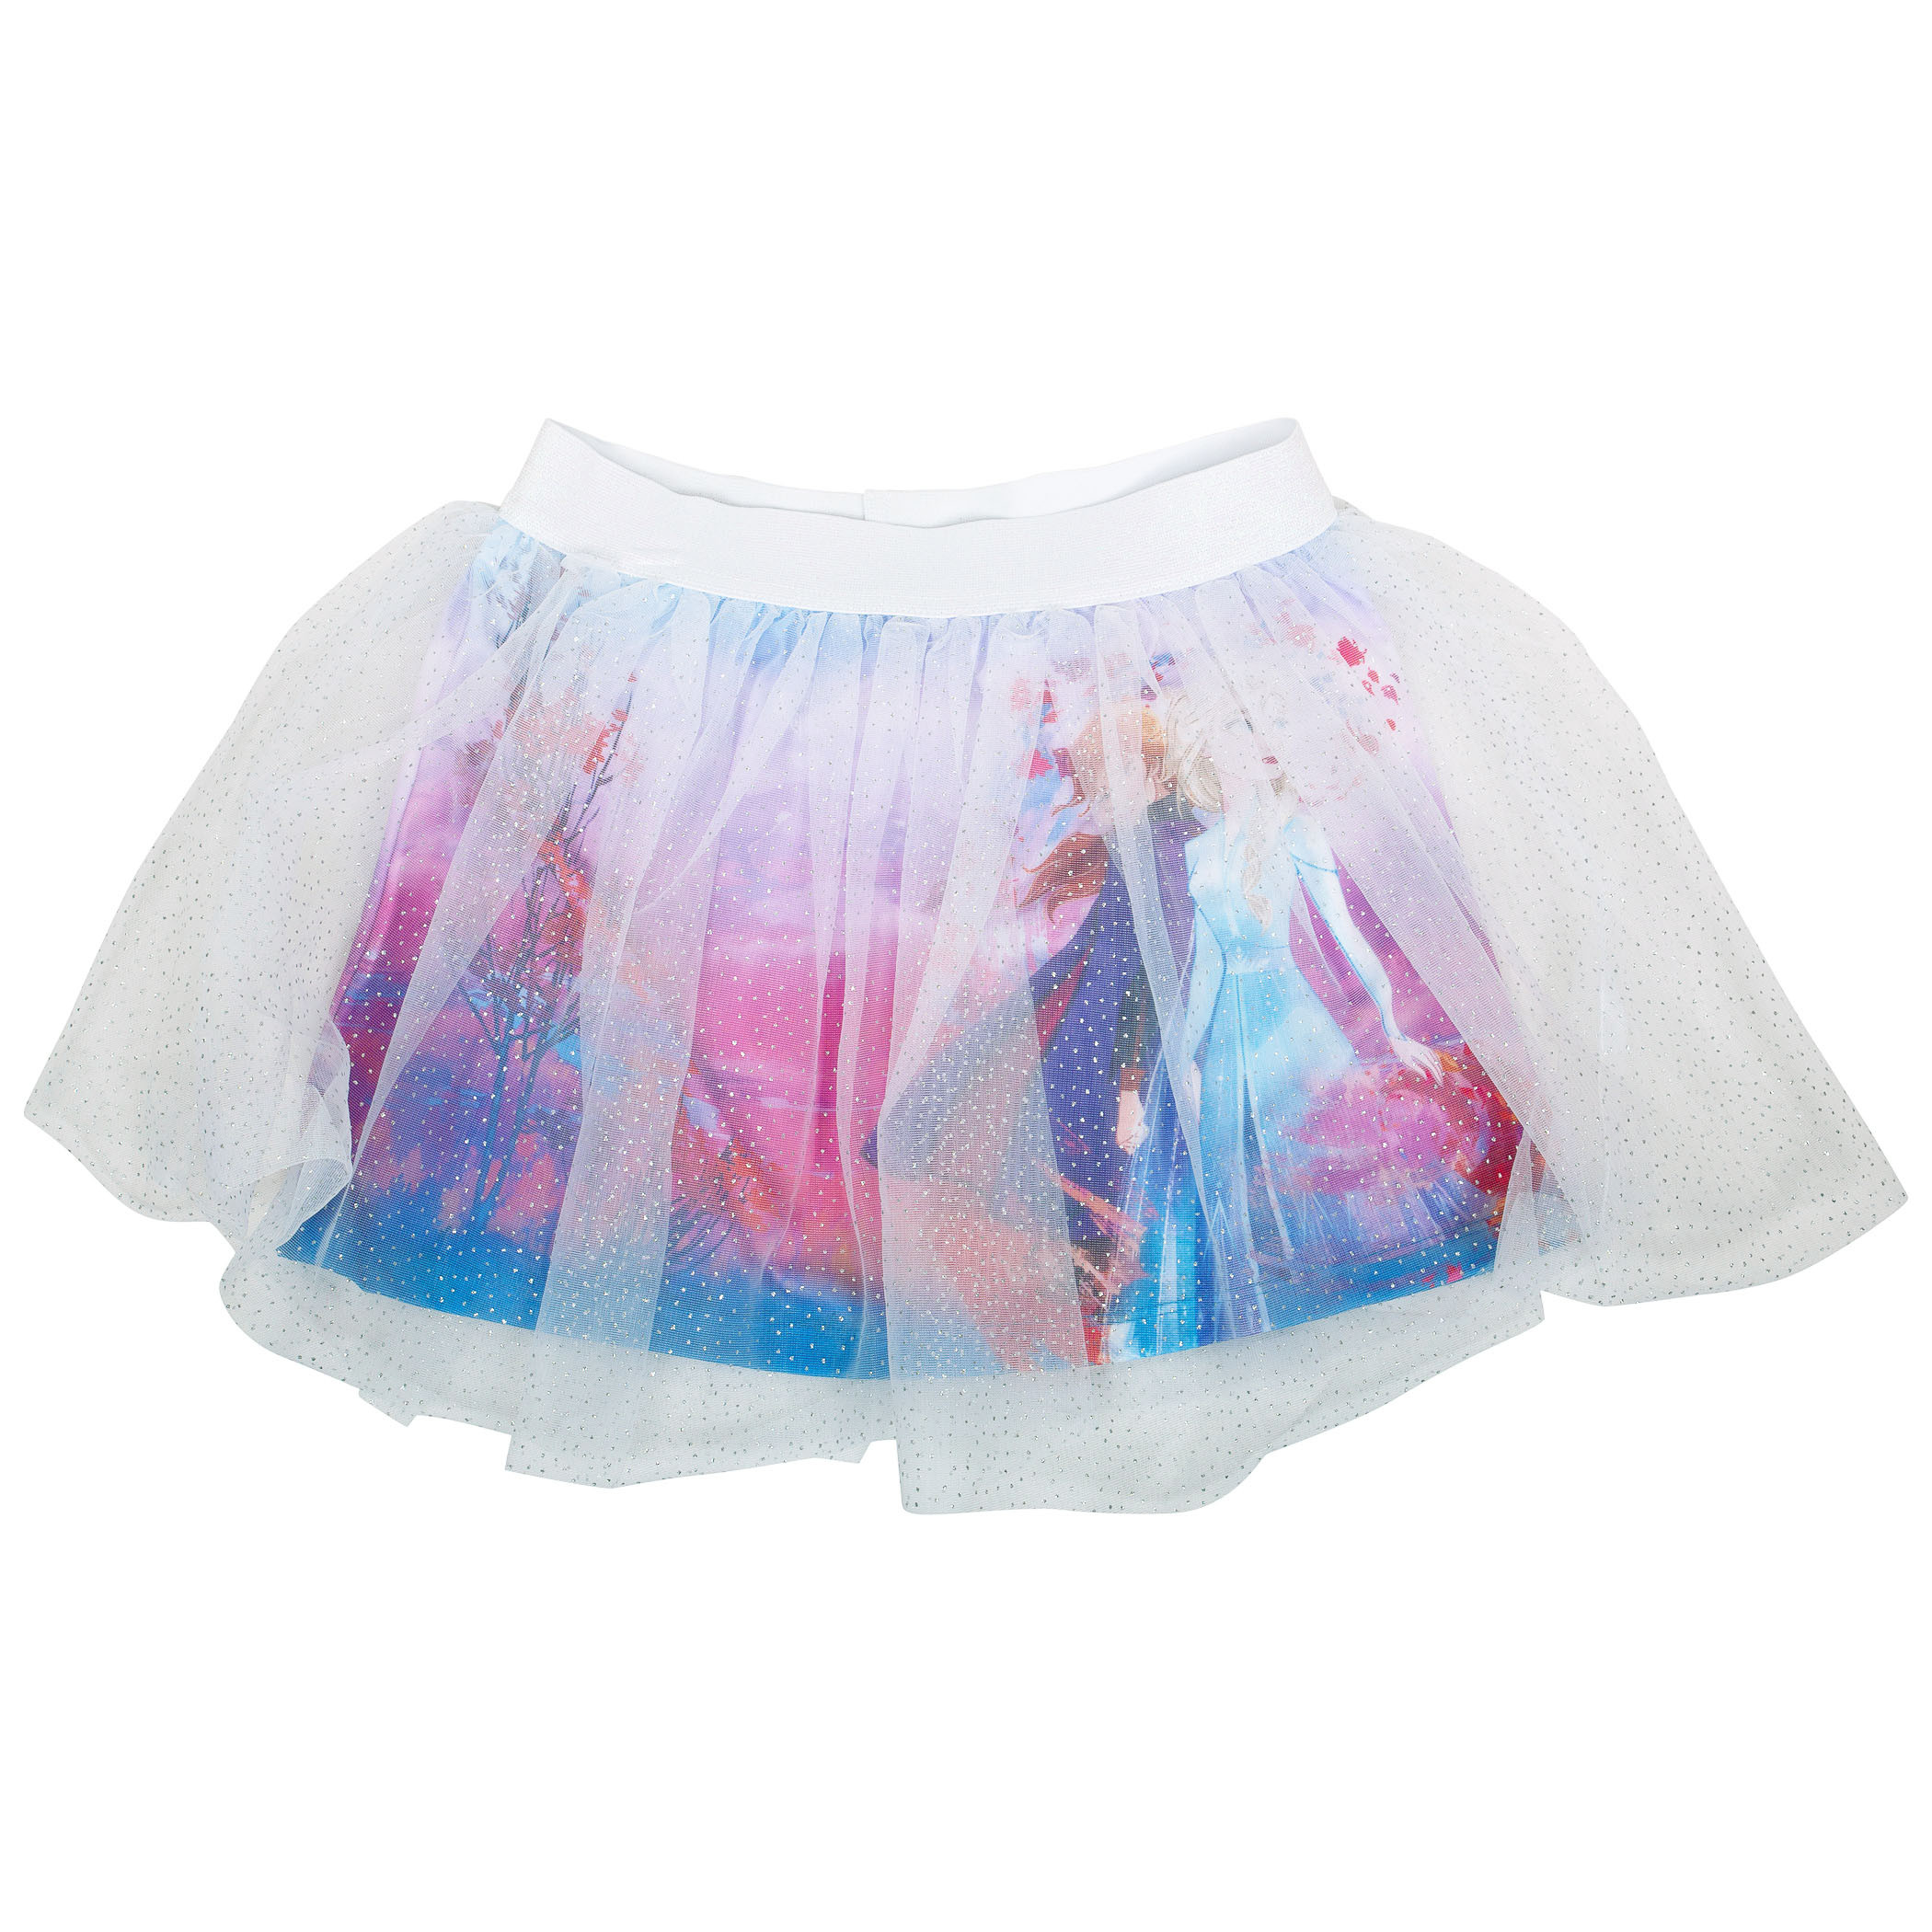 Frozen 2 Tutu Youth Skirt